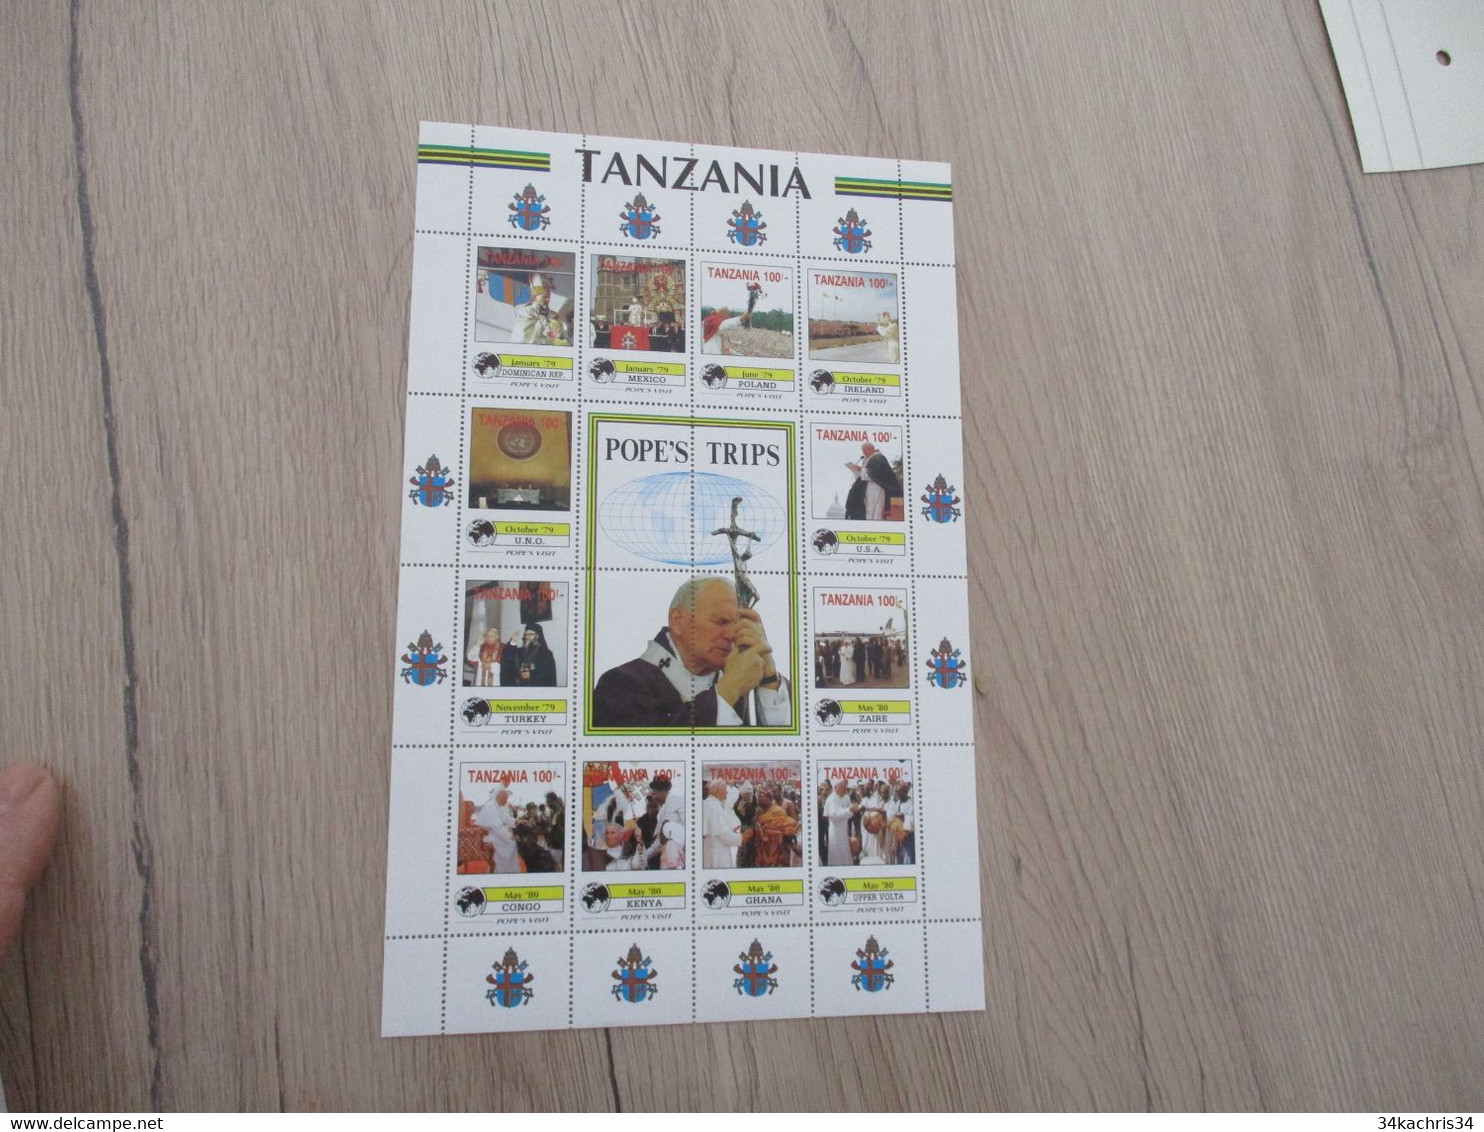 Tanzania Tanzanie voyage du Pape pope's trip 10 ten bloc neuf mint sans charnière